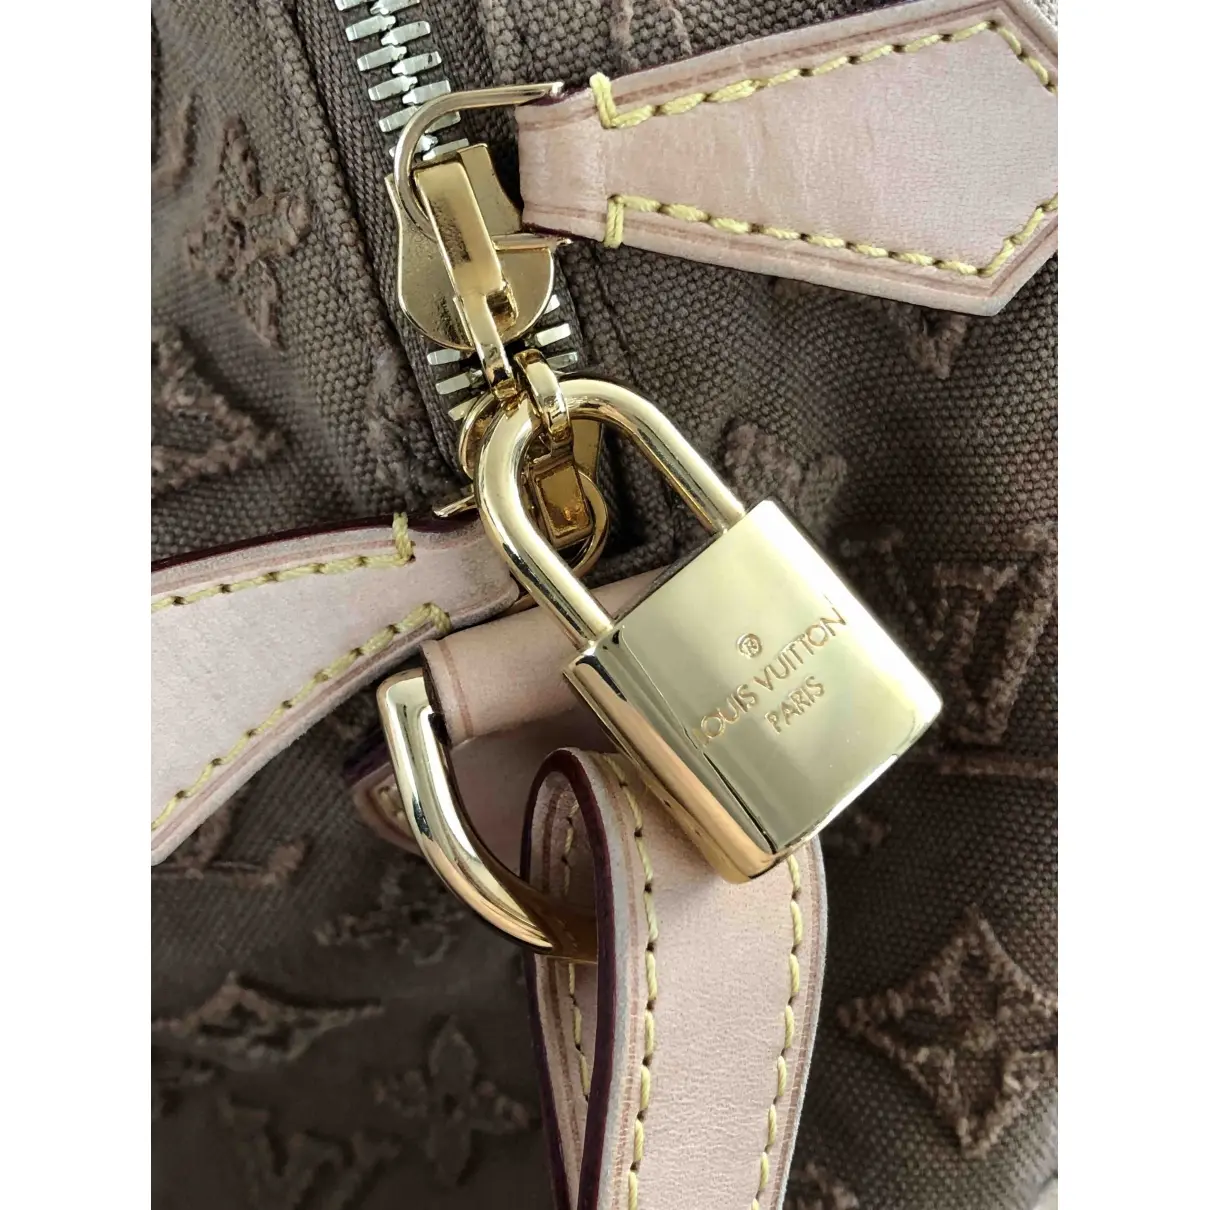 Buy Louis Vuitton Speedy Bandoulière handbag online